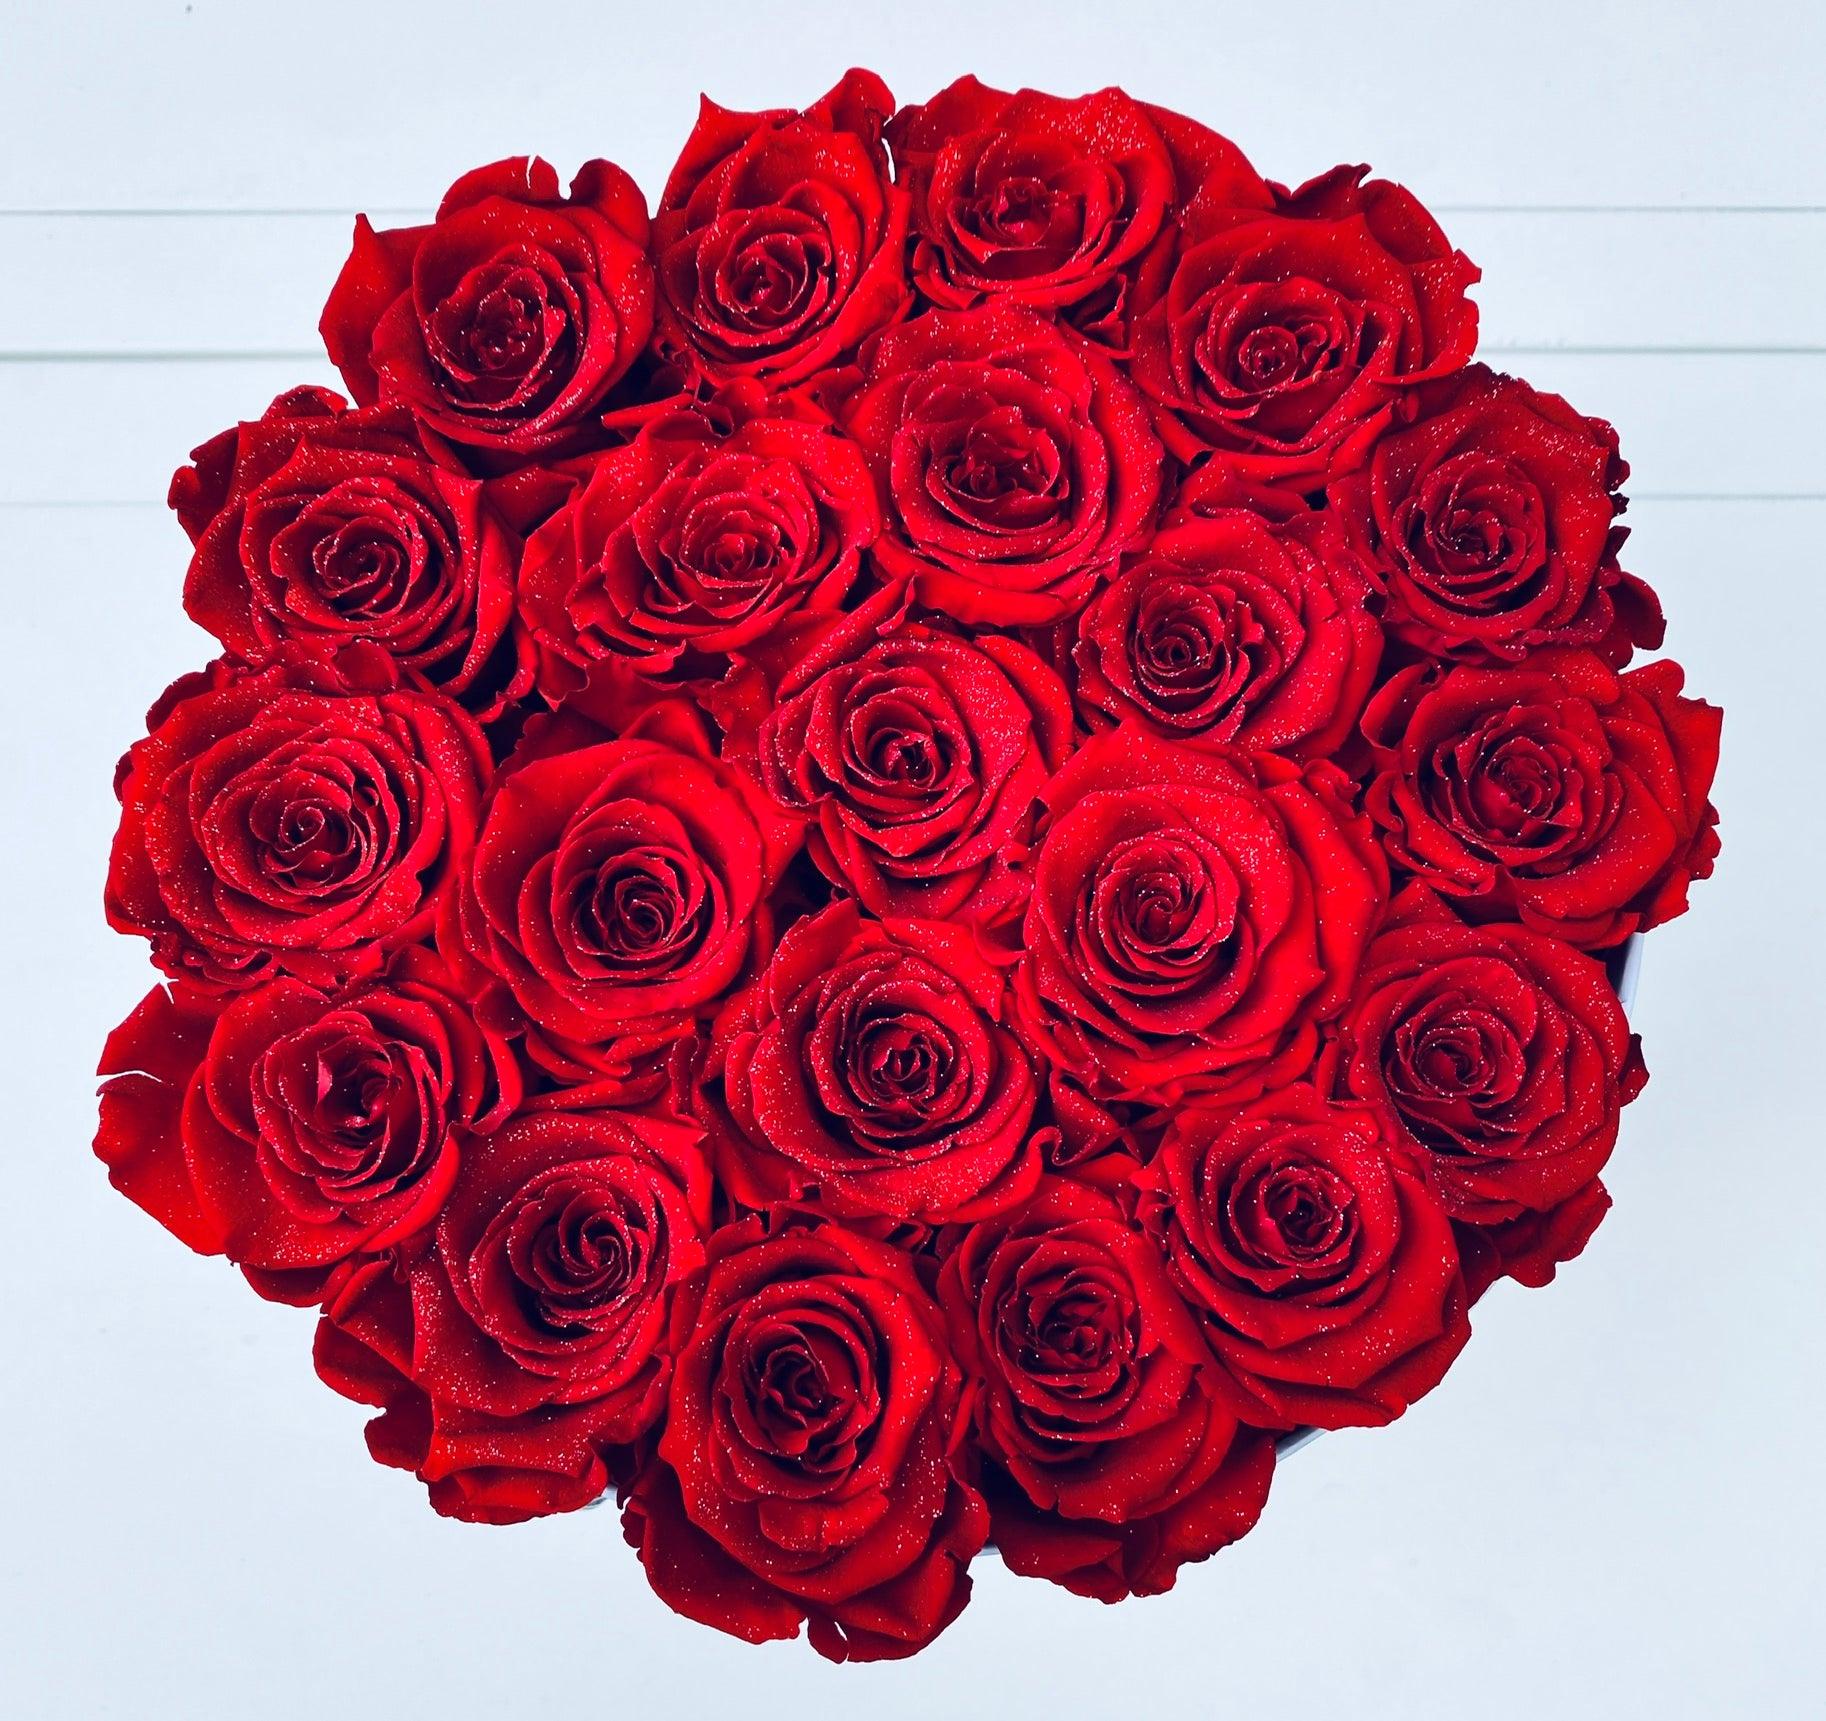 XL Black Round Box - Preserved Roses - Flor De Lux